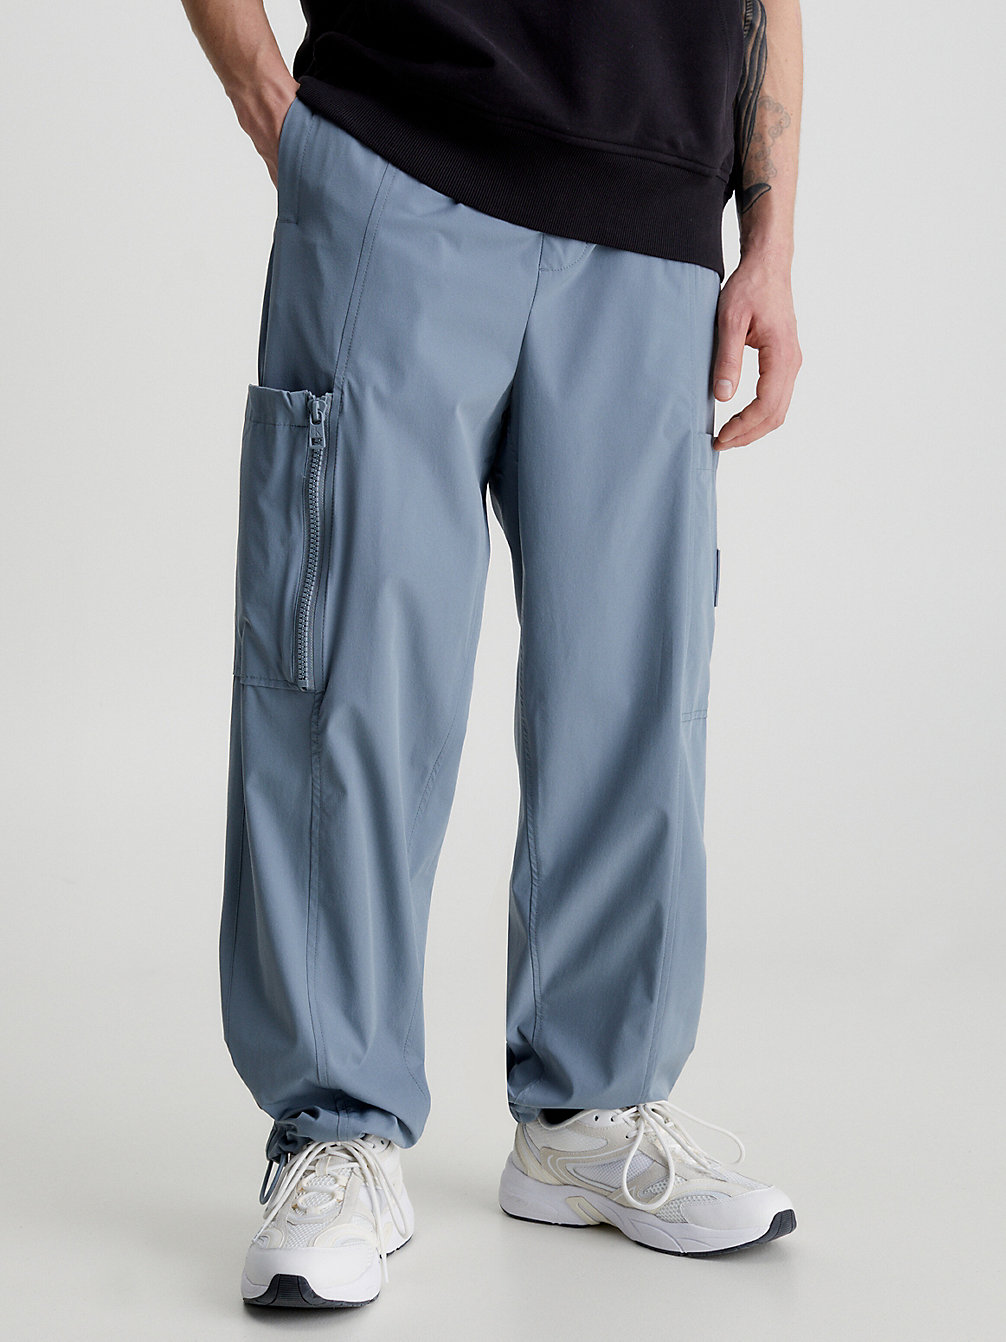 Pantaloni Cargo Gamba Larga In Tessuto Riciclato > OVERCAST GREY > undefined uomo > Calvin Klein